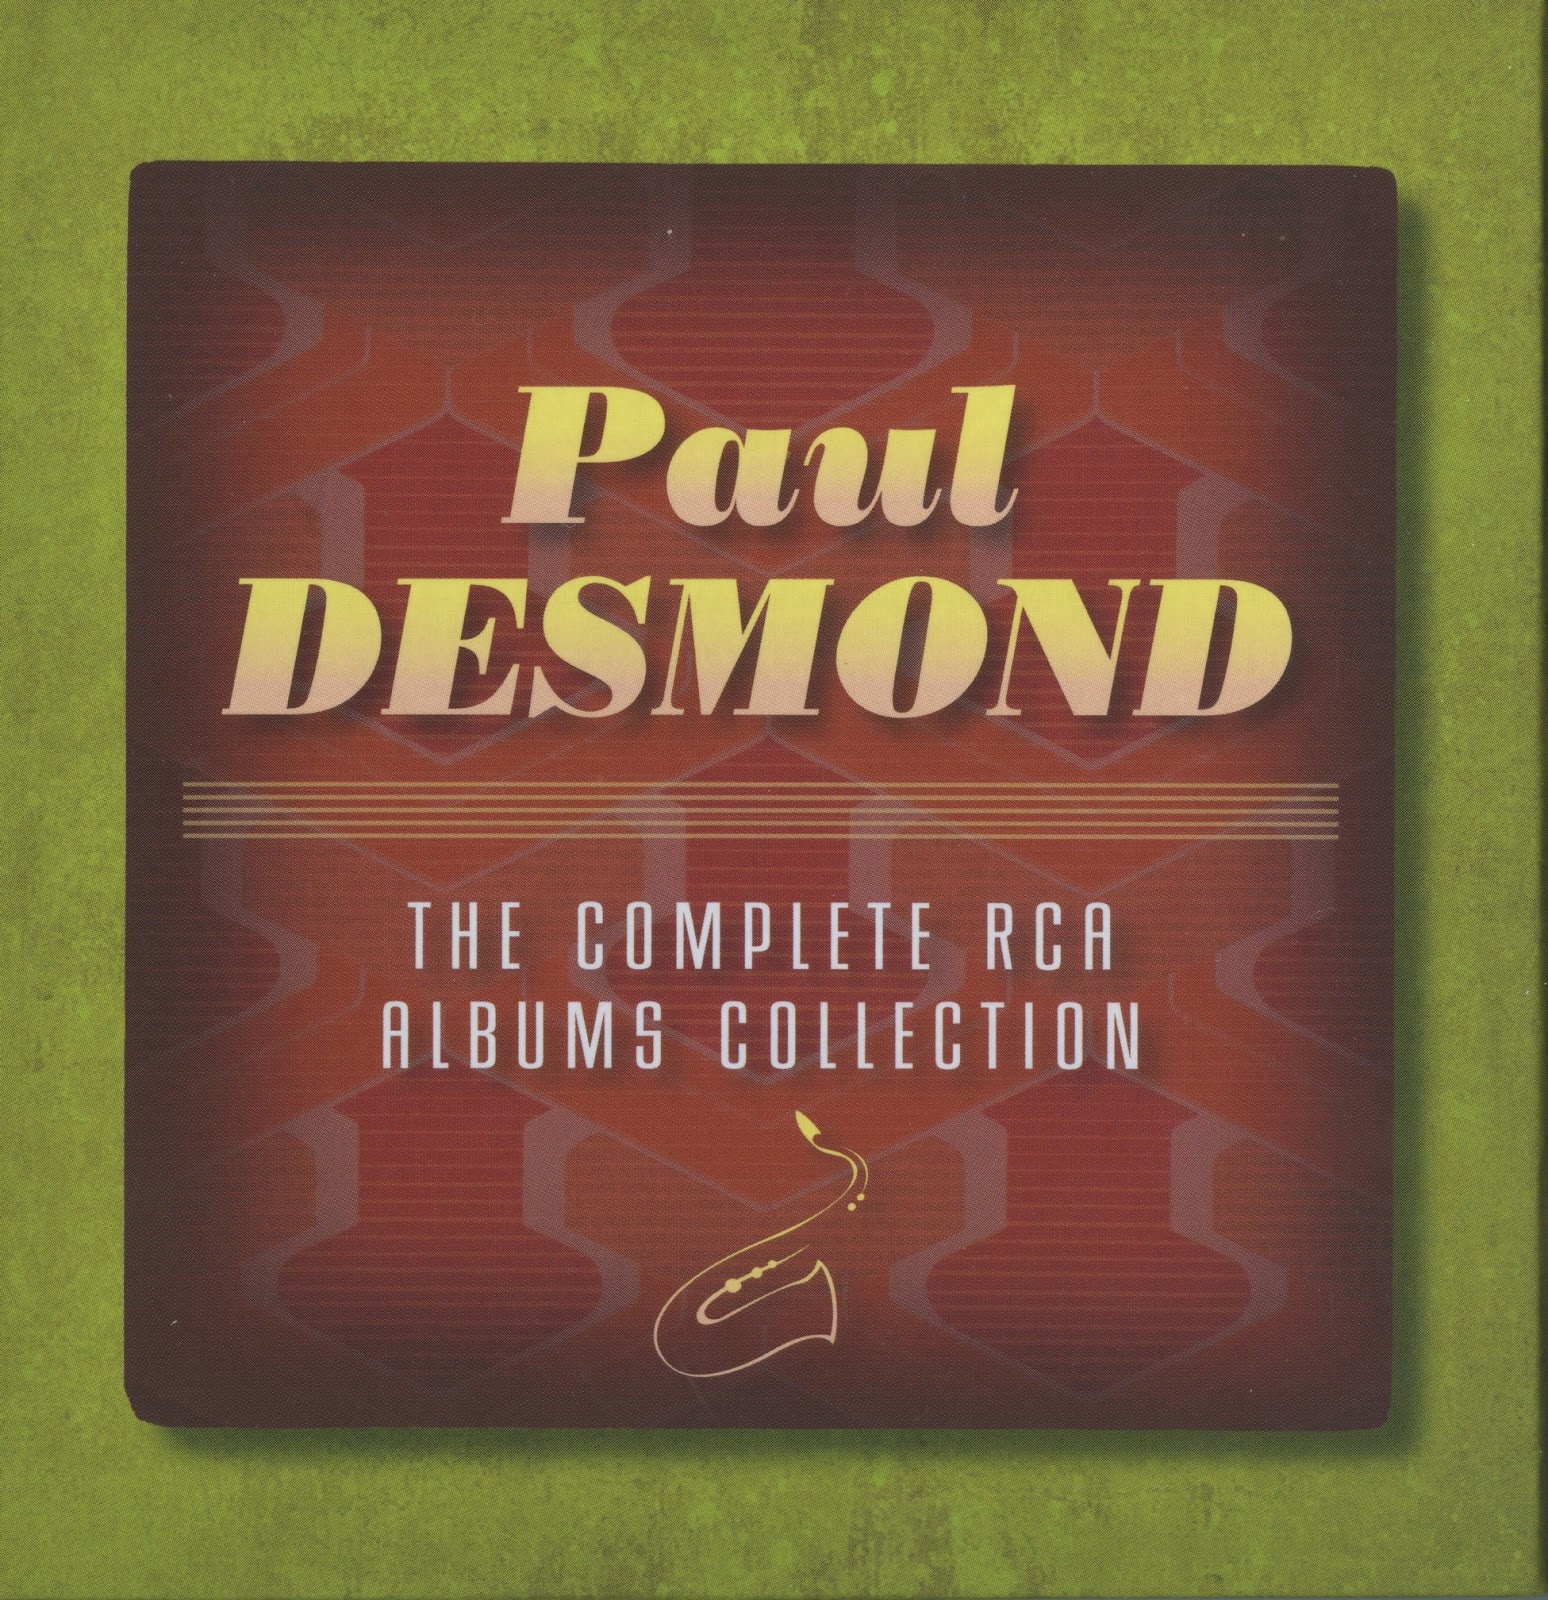 Paul+Desmond+on+RCA.jpg